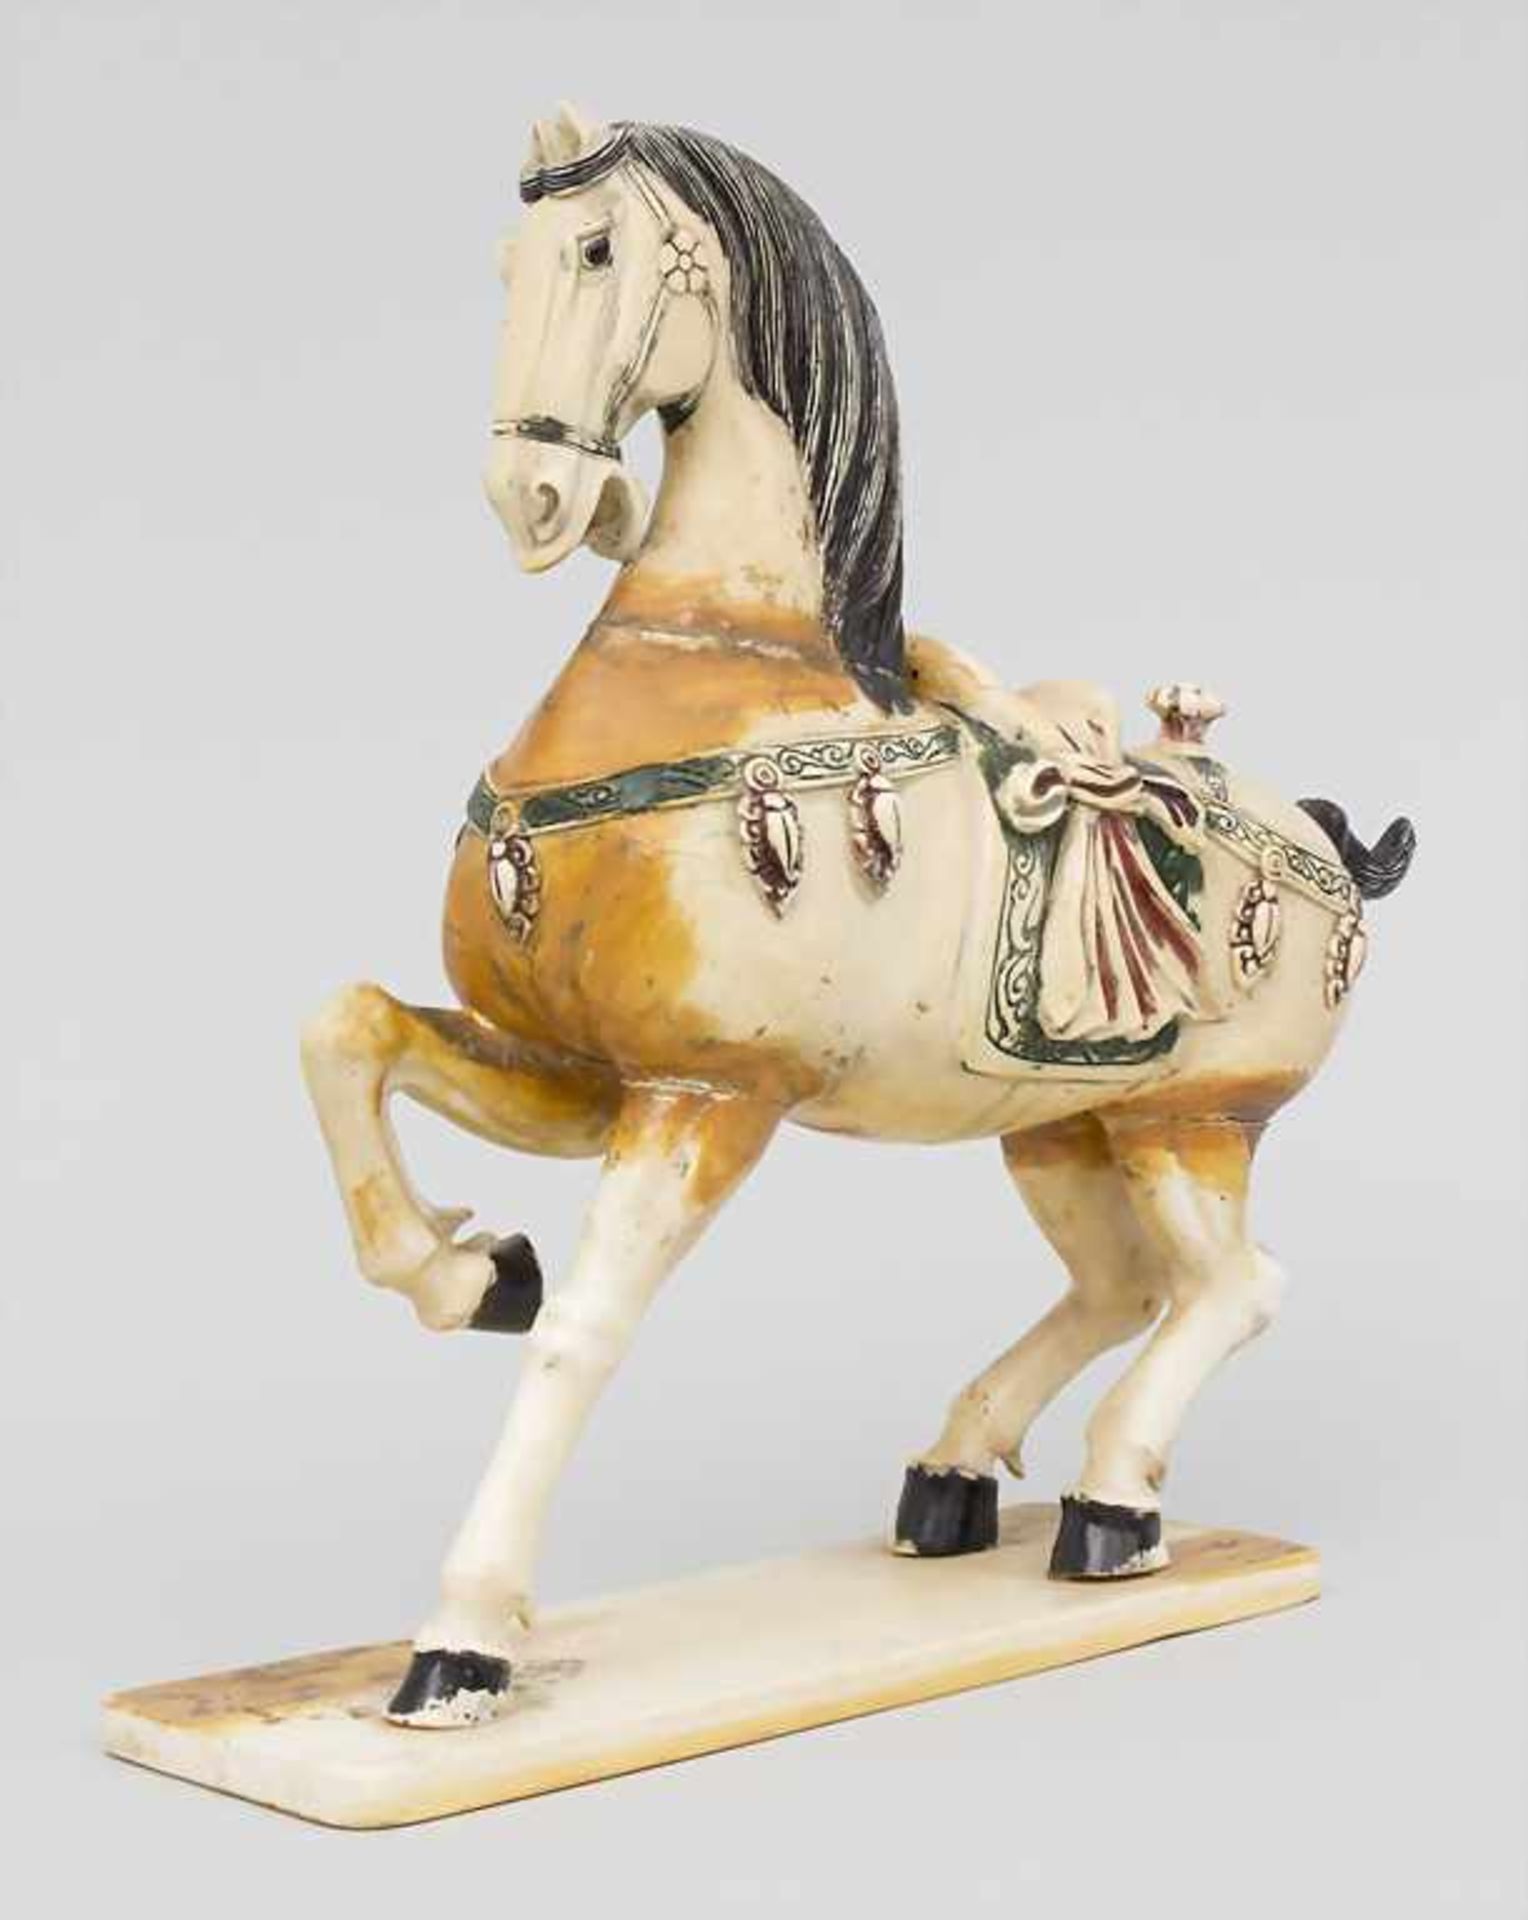 Tierfigur 'Pferd' / An animal figure 'Horse', China, 18. / 19. Jh.